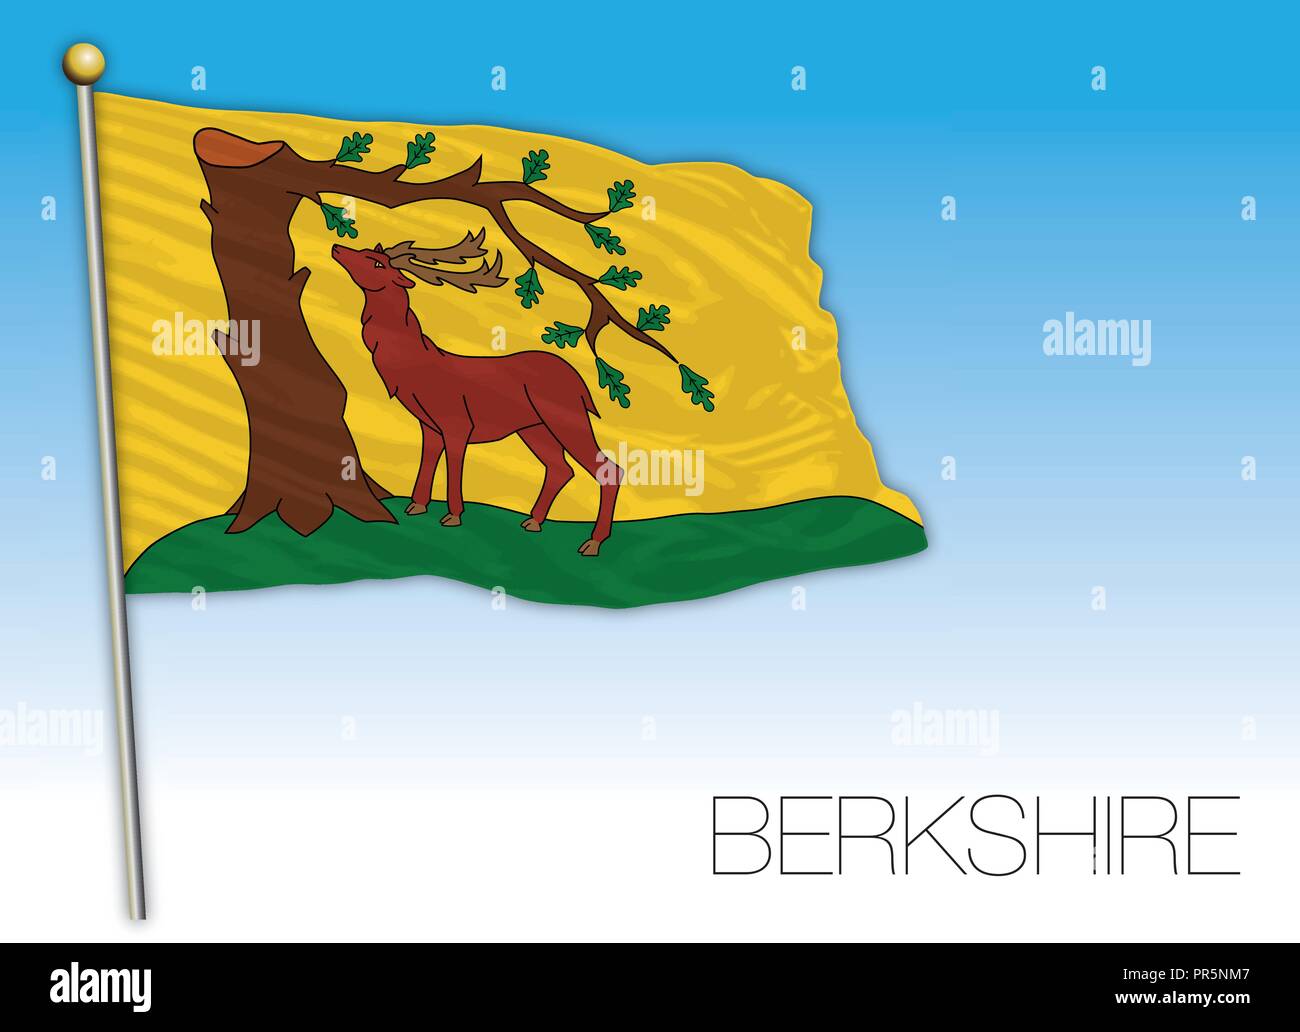 Berkshire flag, United Kingdom, vector illustration Stock Vector